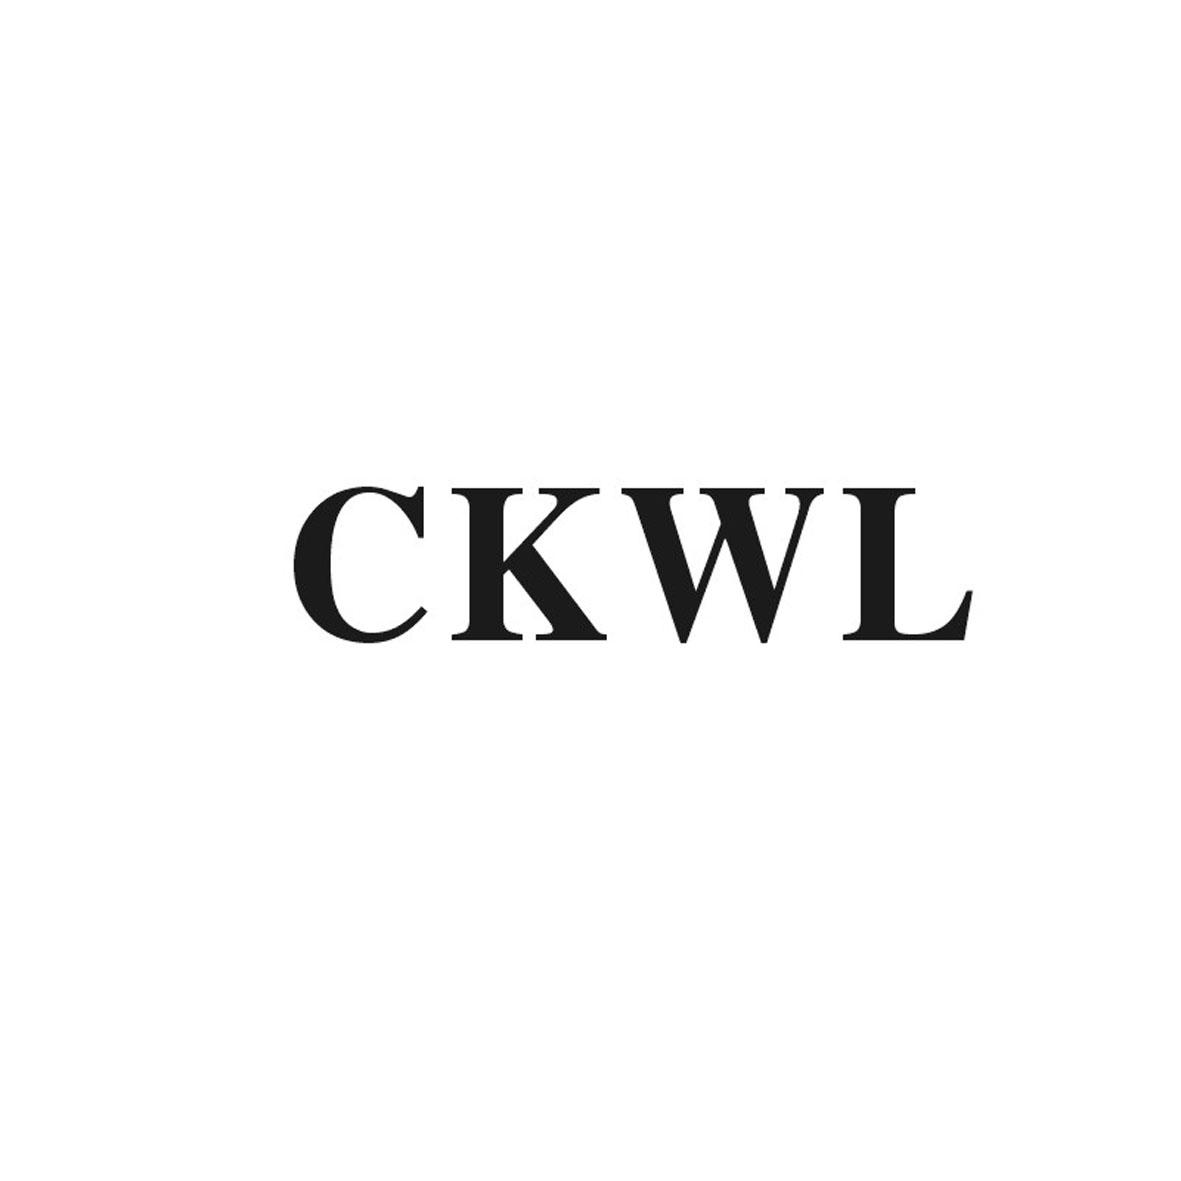 CKWL